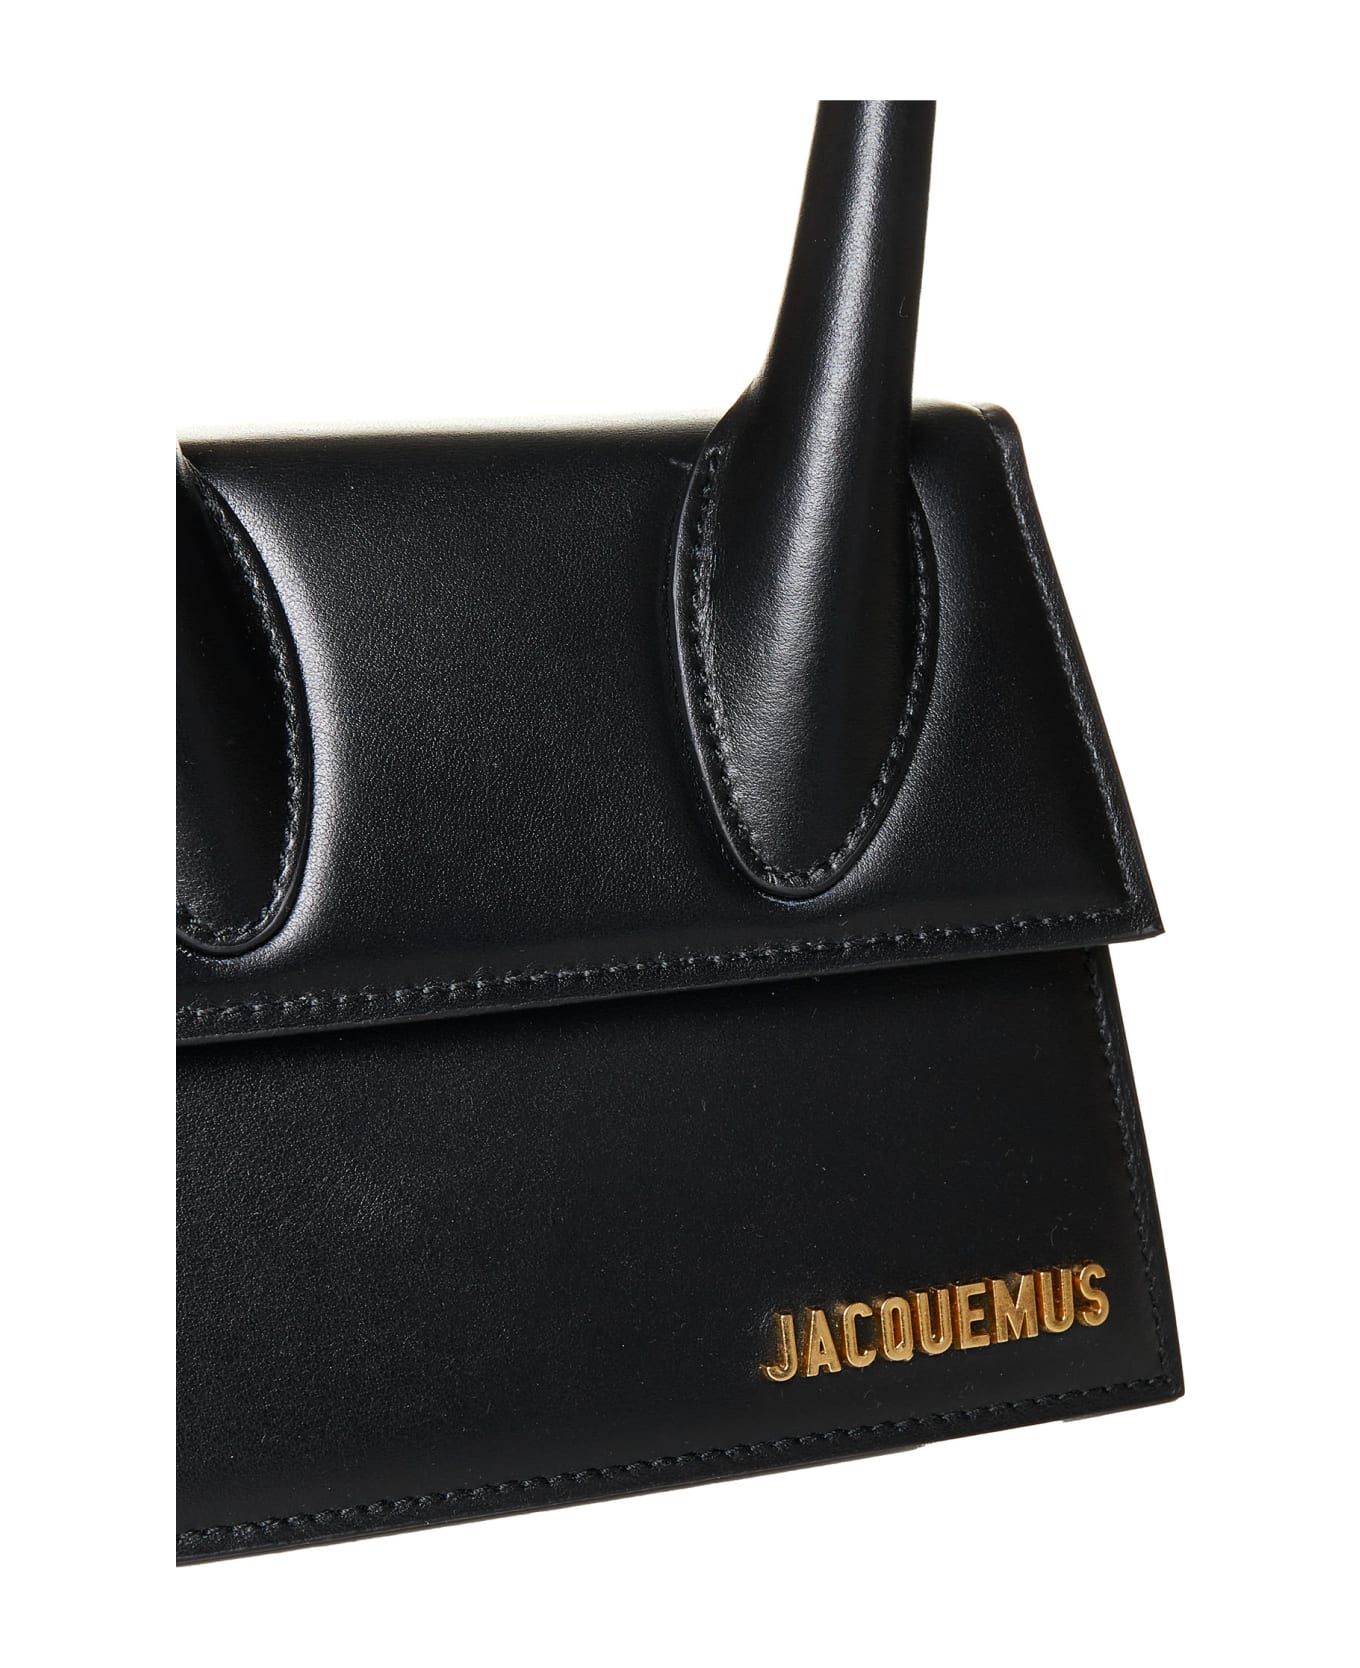 Jacquemus Le Chiquito Handbag - Black